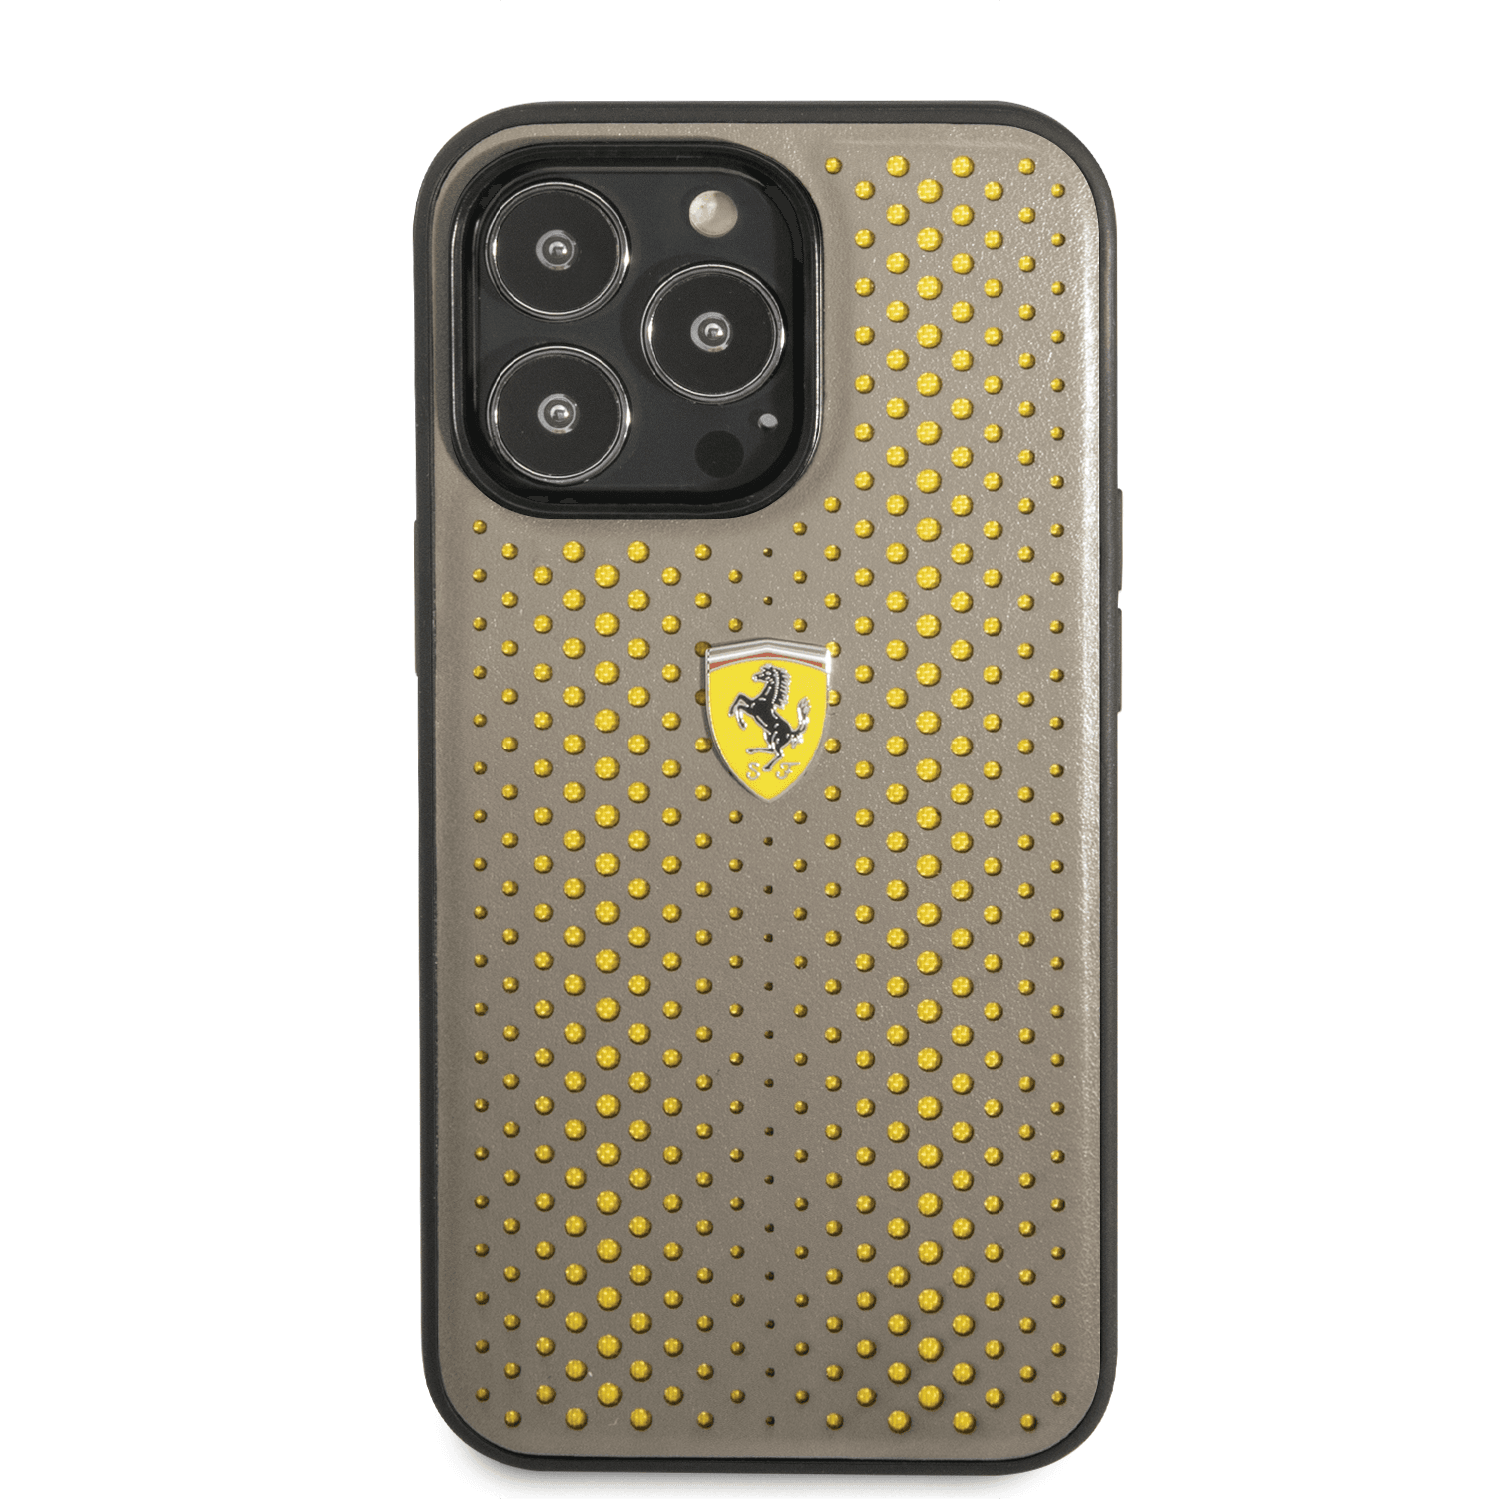 كفر ايفون 14 برو جلد مع ارضية نايلون فيراري أصفر Ferrari PU Leather Perforated Case With Nylon Base - cG9zdDoxMzY4NTM3